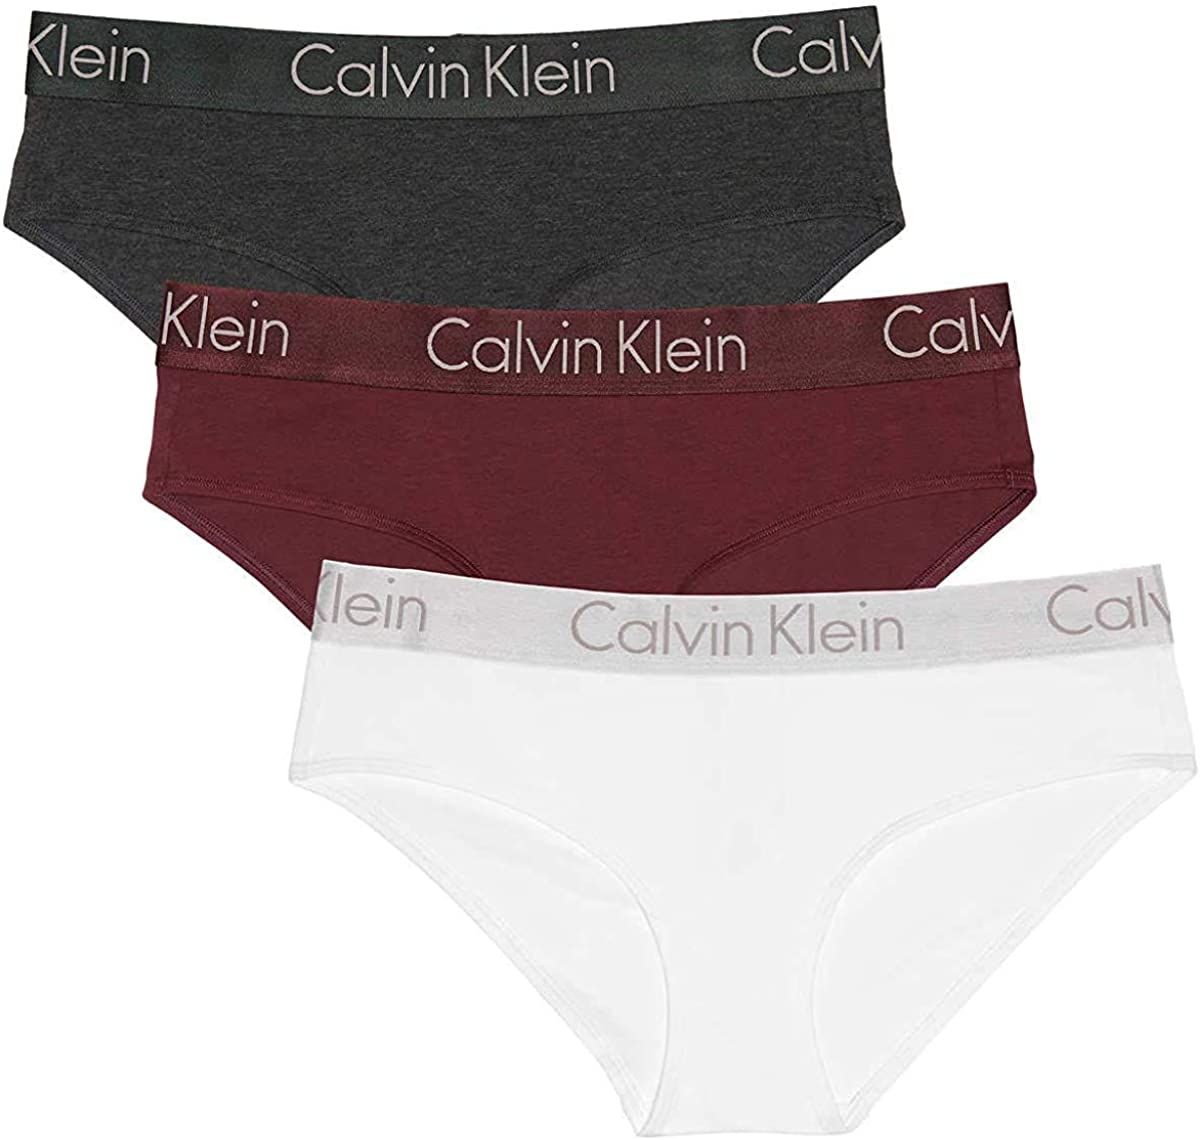 Price:$31.76 Calvin Klein Women's Hipster Underwear, 3-Pack (Medium), Maroon, White, Charcoal at Amazon Women’s Clothing store